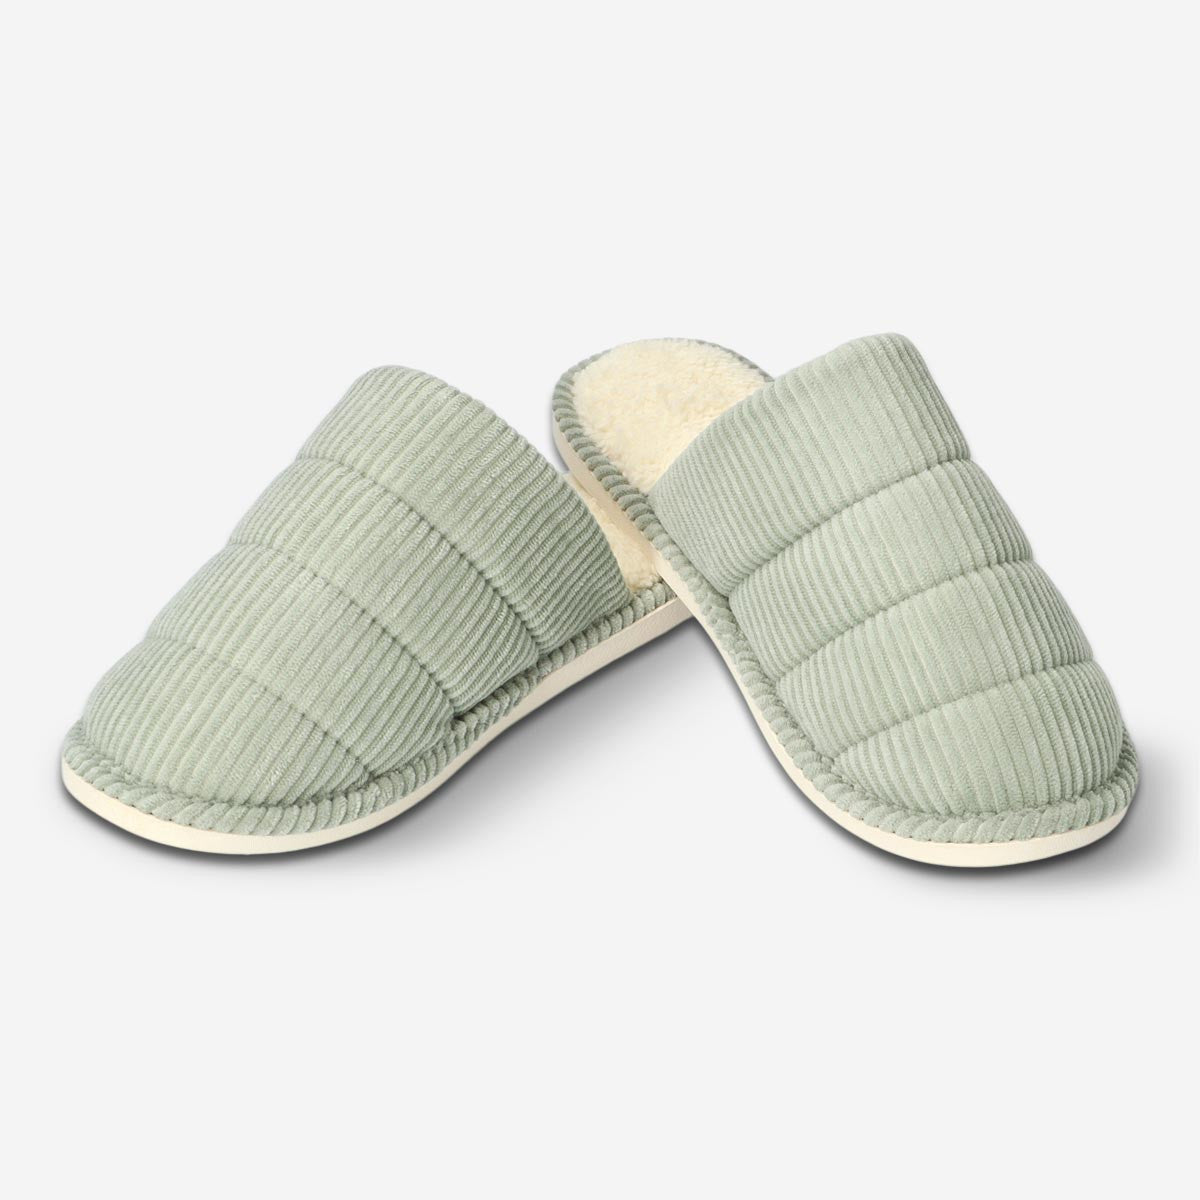 Shoes - Fur slipper (no box) Size: 36-37, 38-39, 40-41 (3... | Facebook